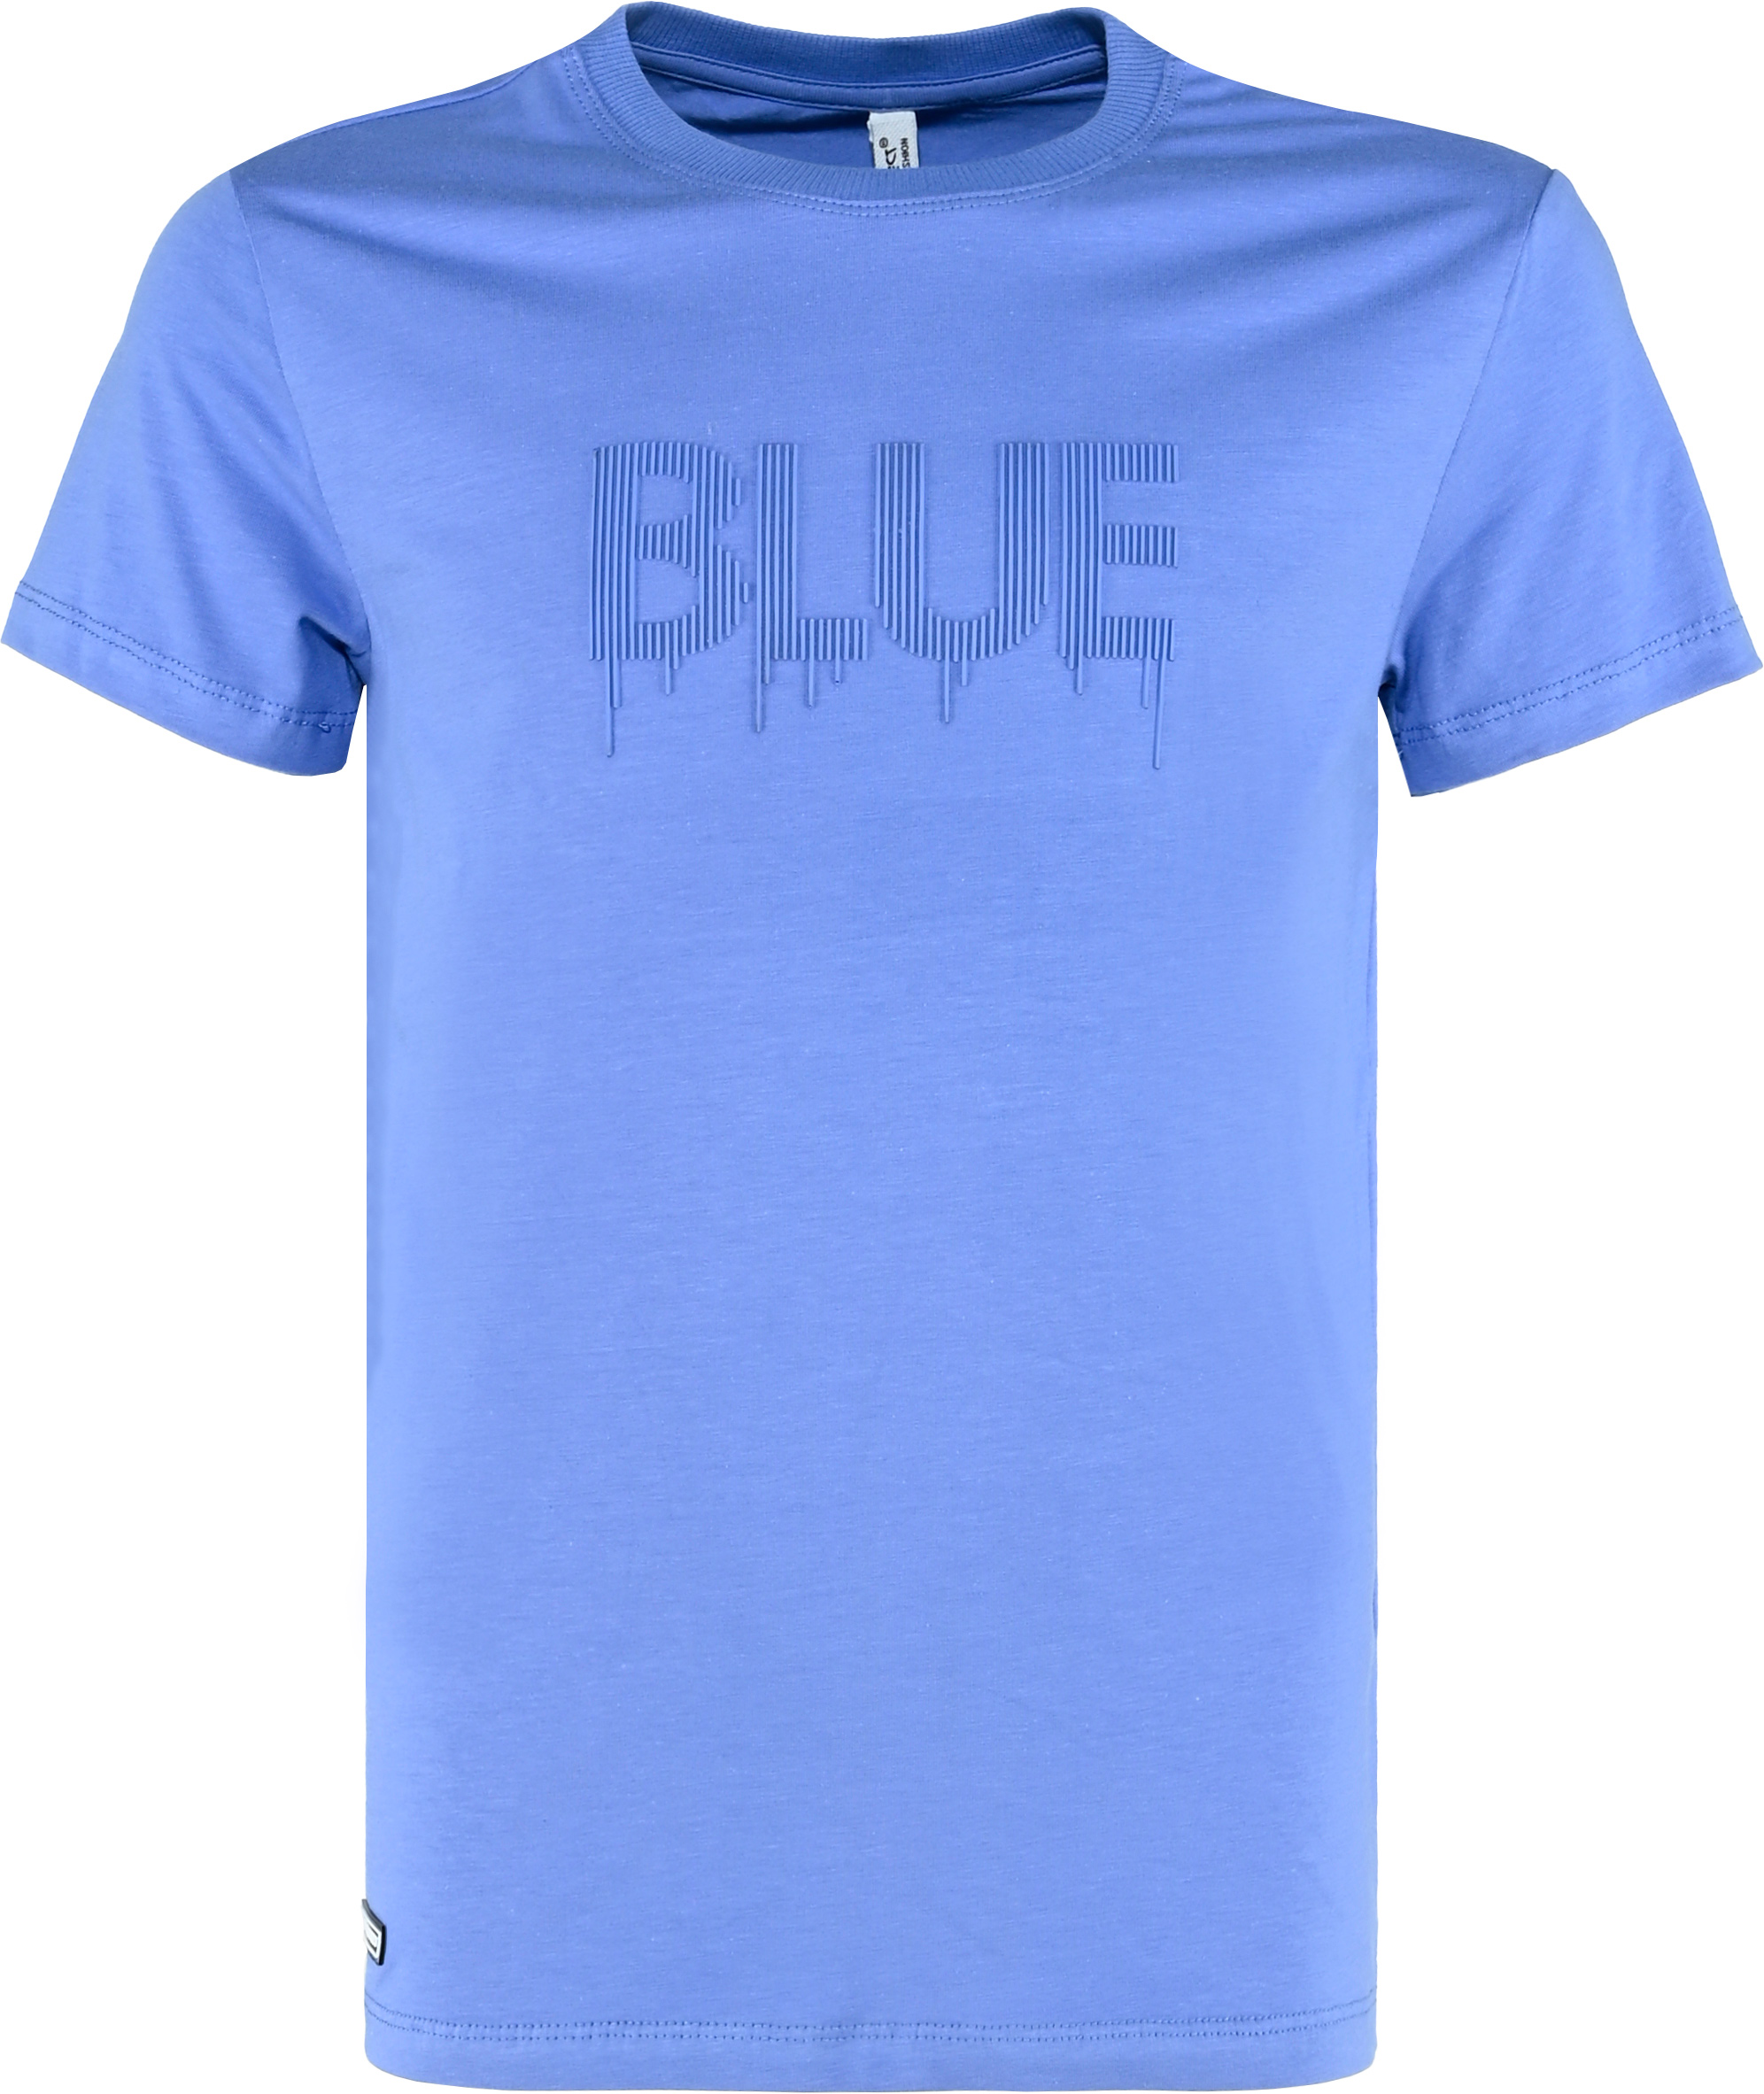 6189-Boys T-Shirt -BLUE